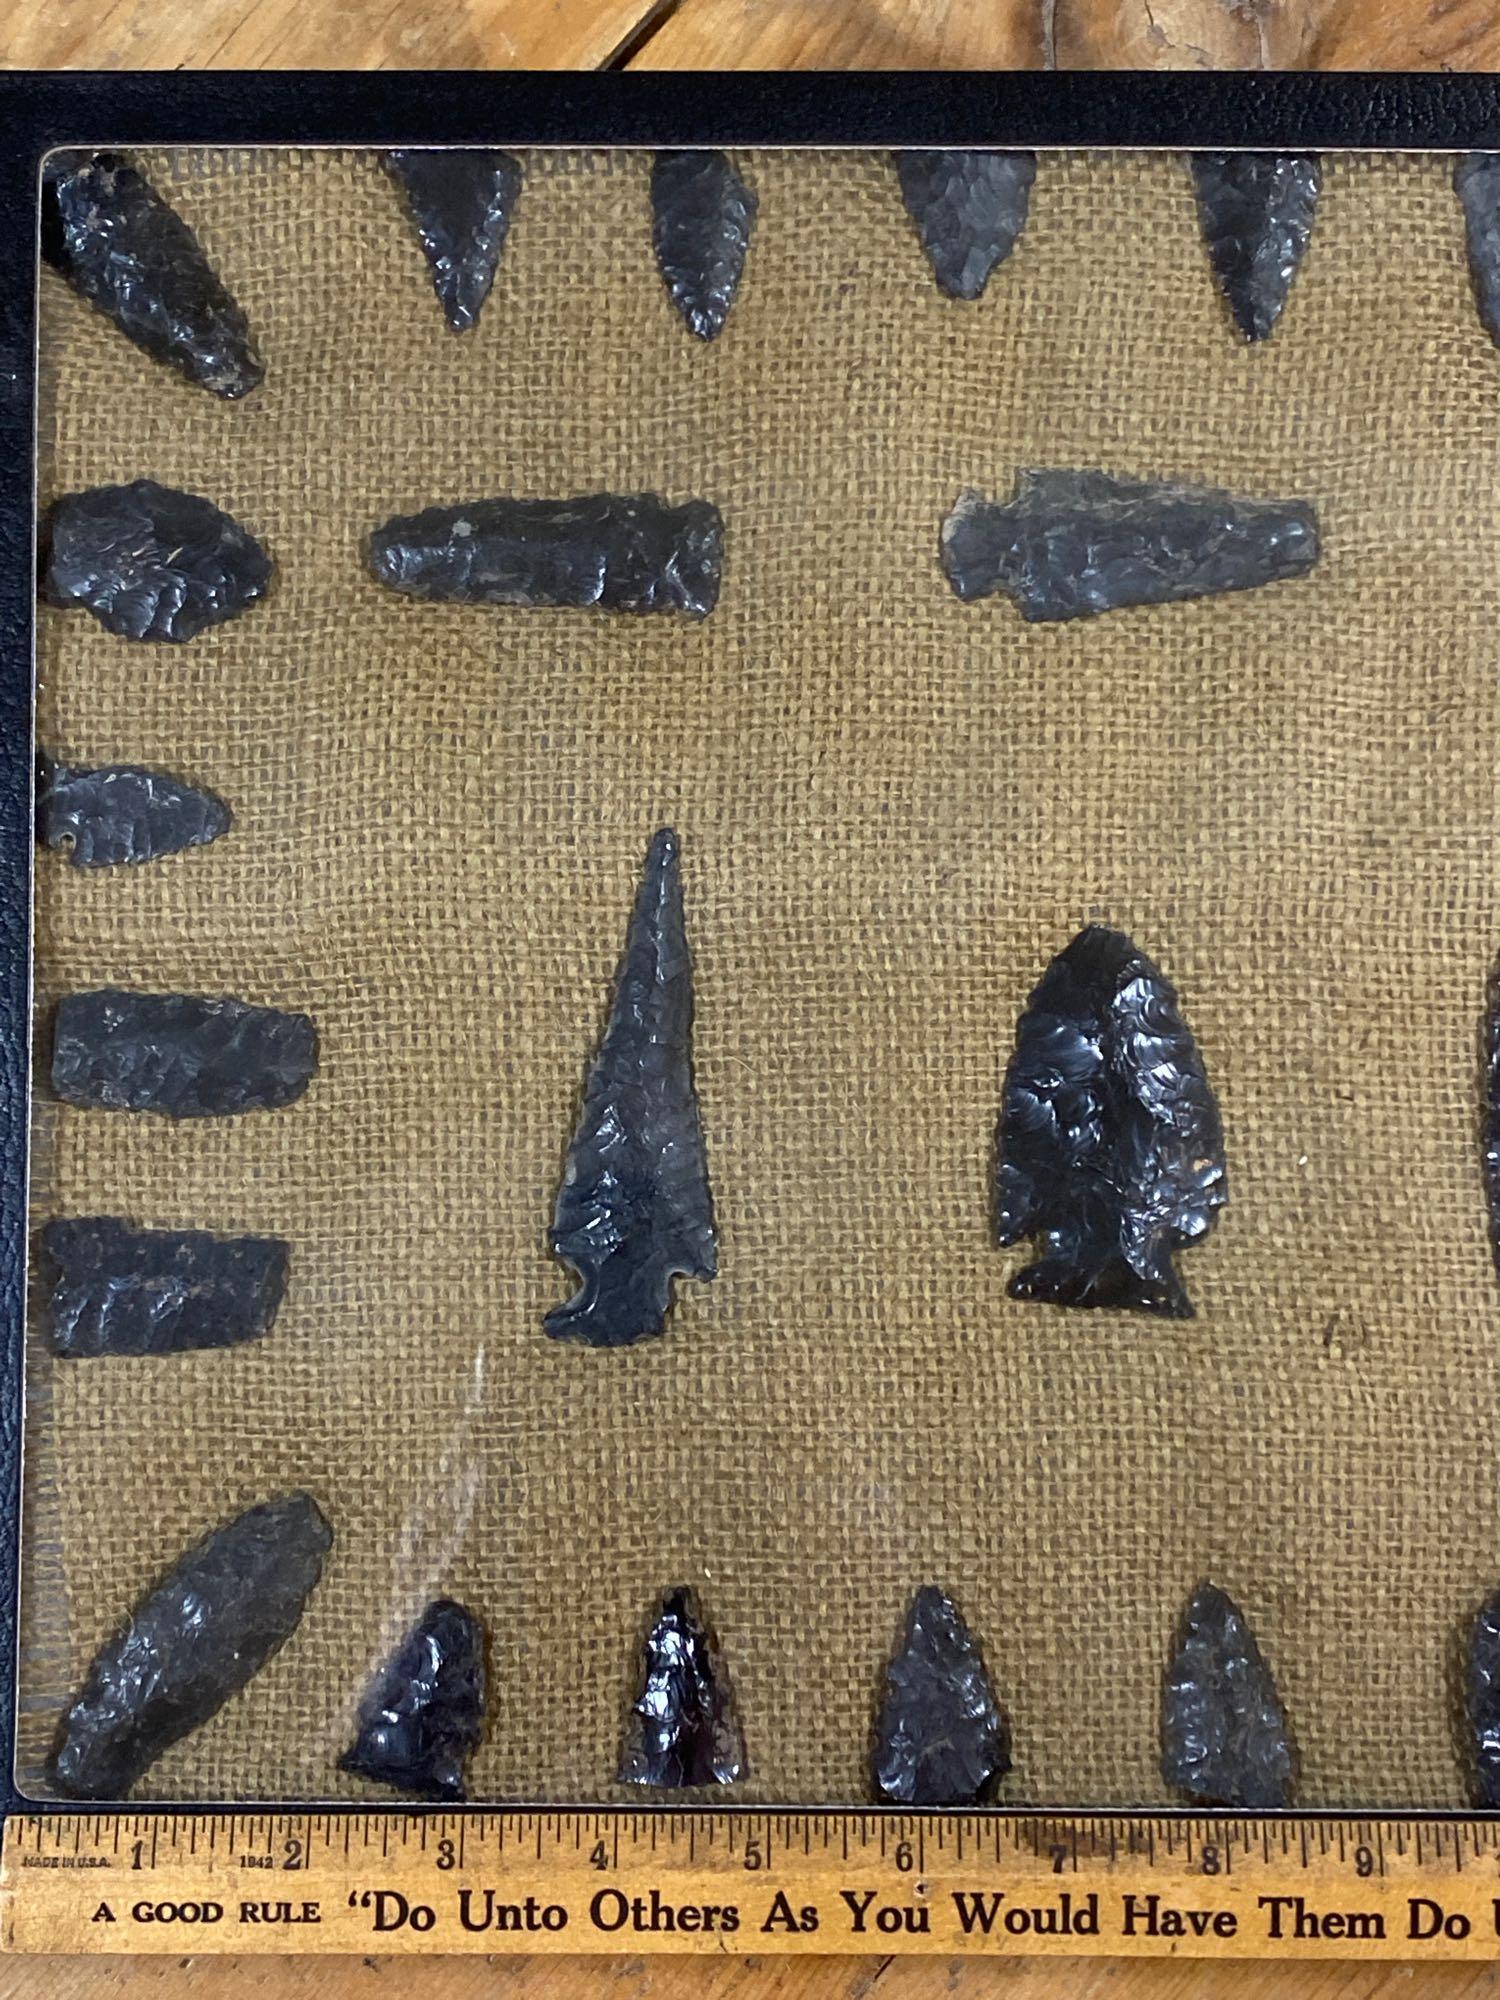 (30) Great Basin Obsidian Arrowheads & Knives